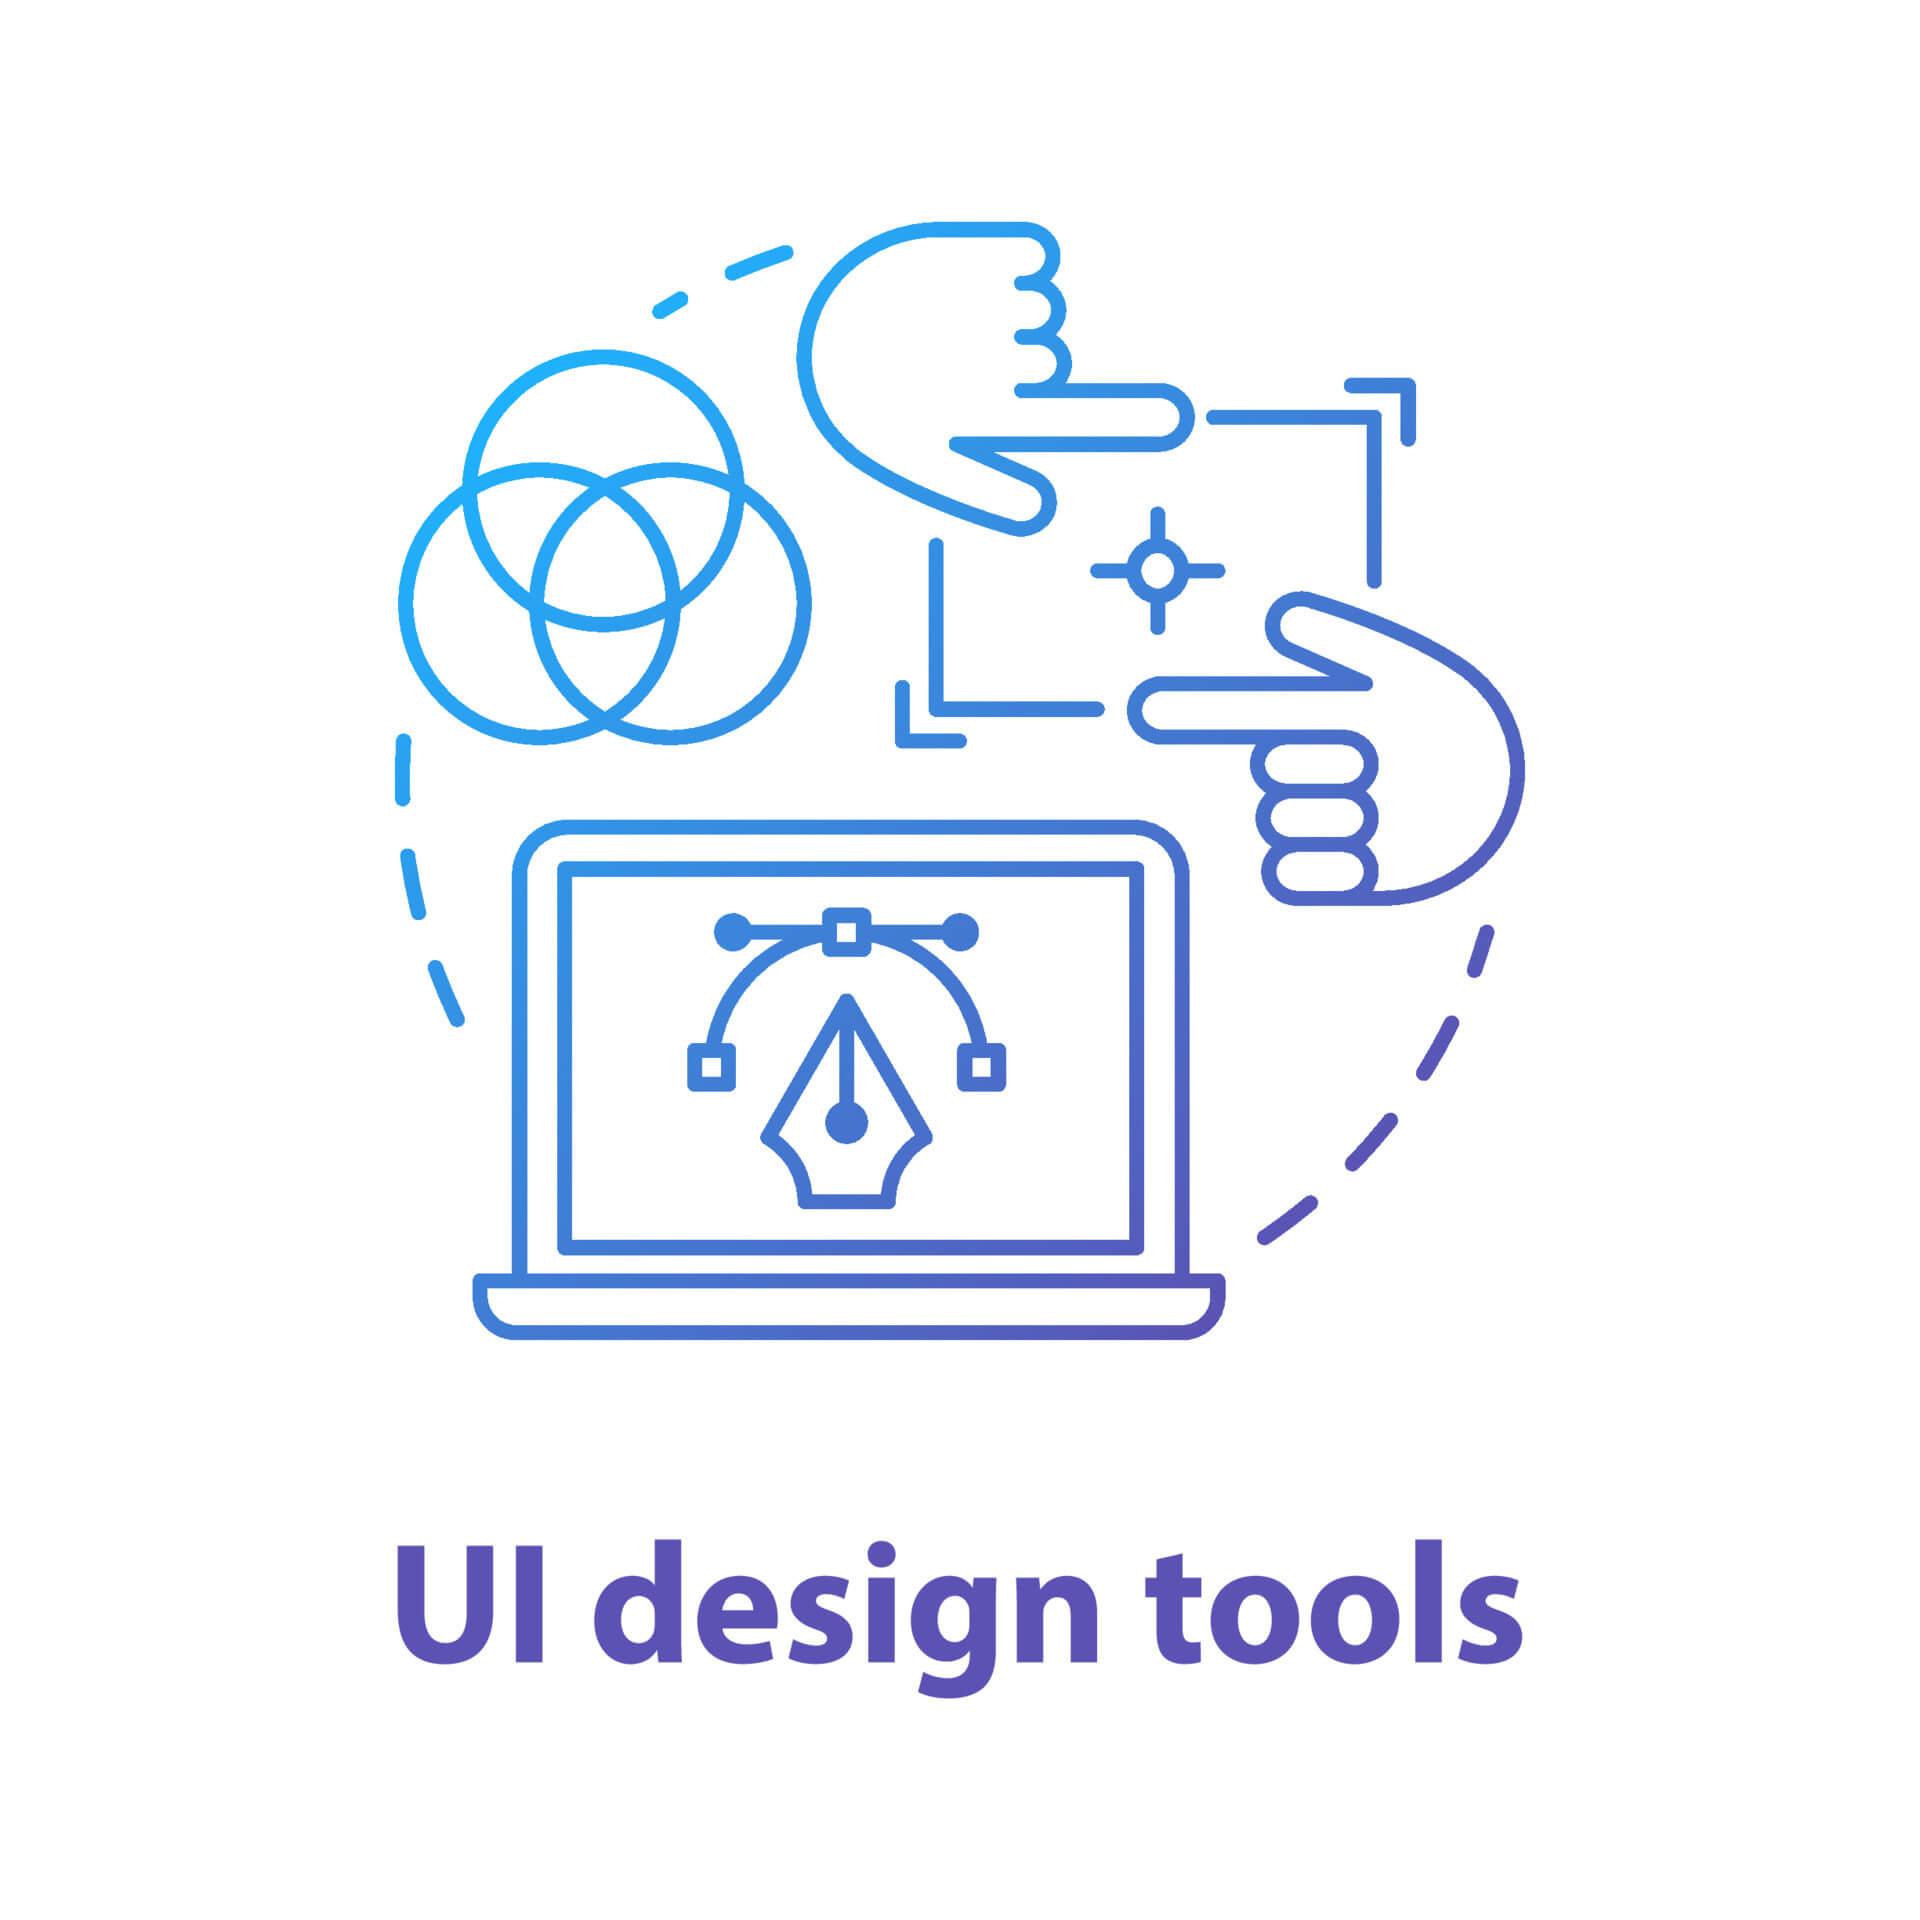 Software and Web UI Design